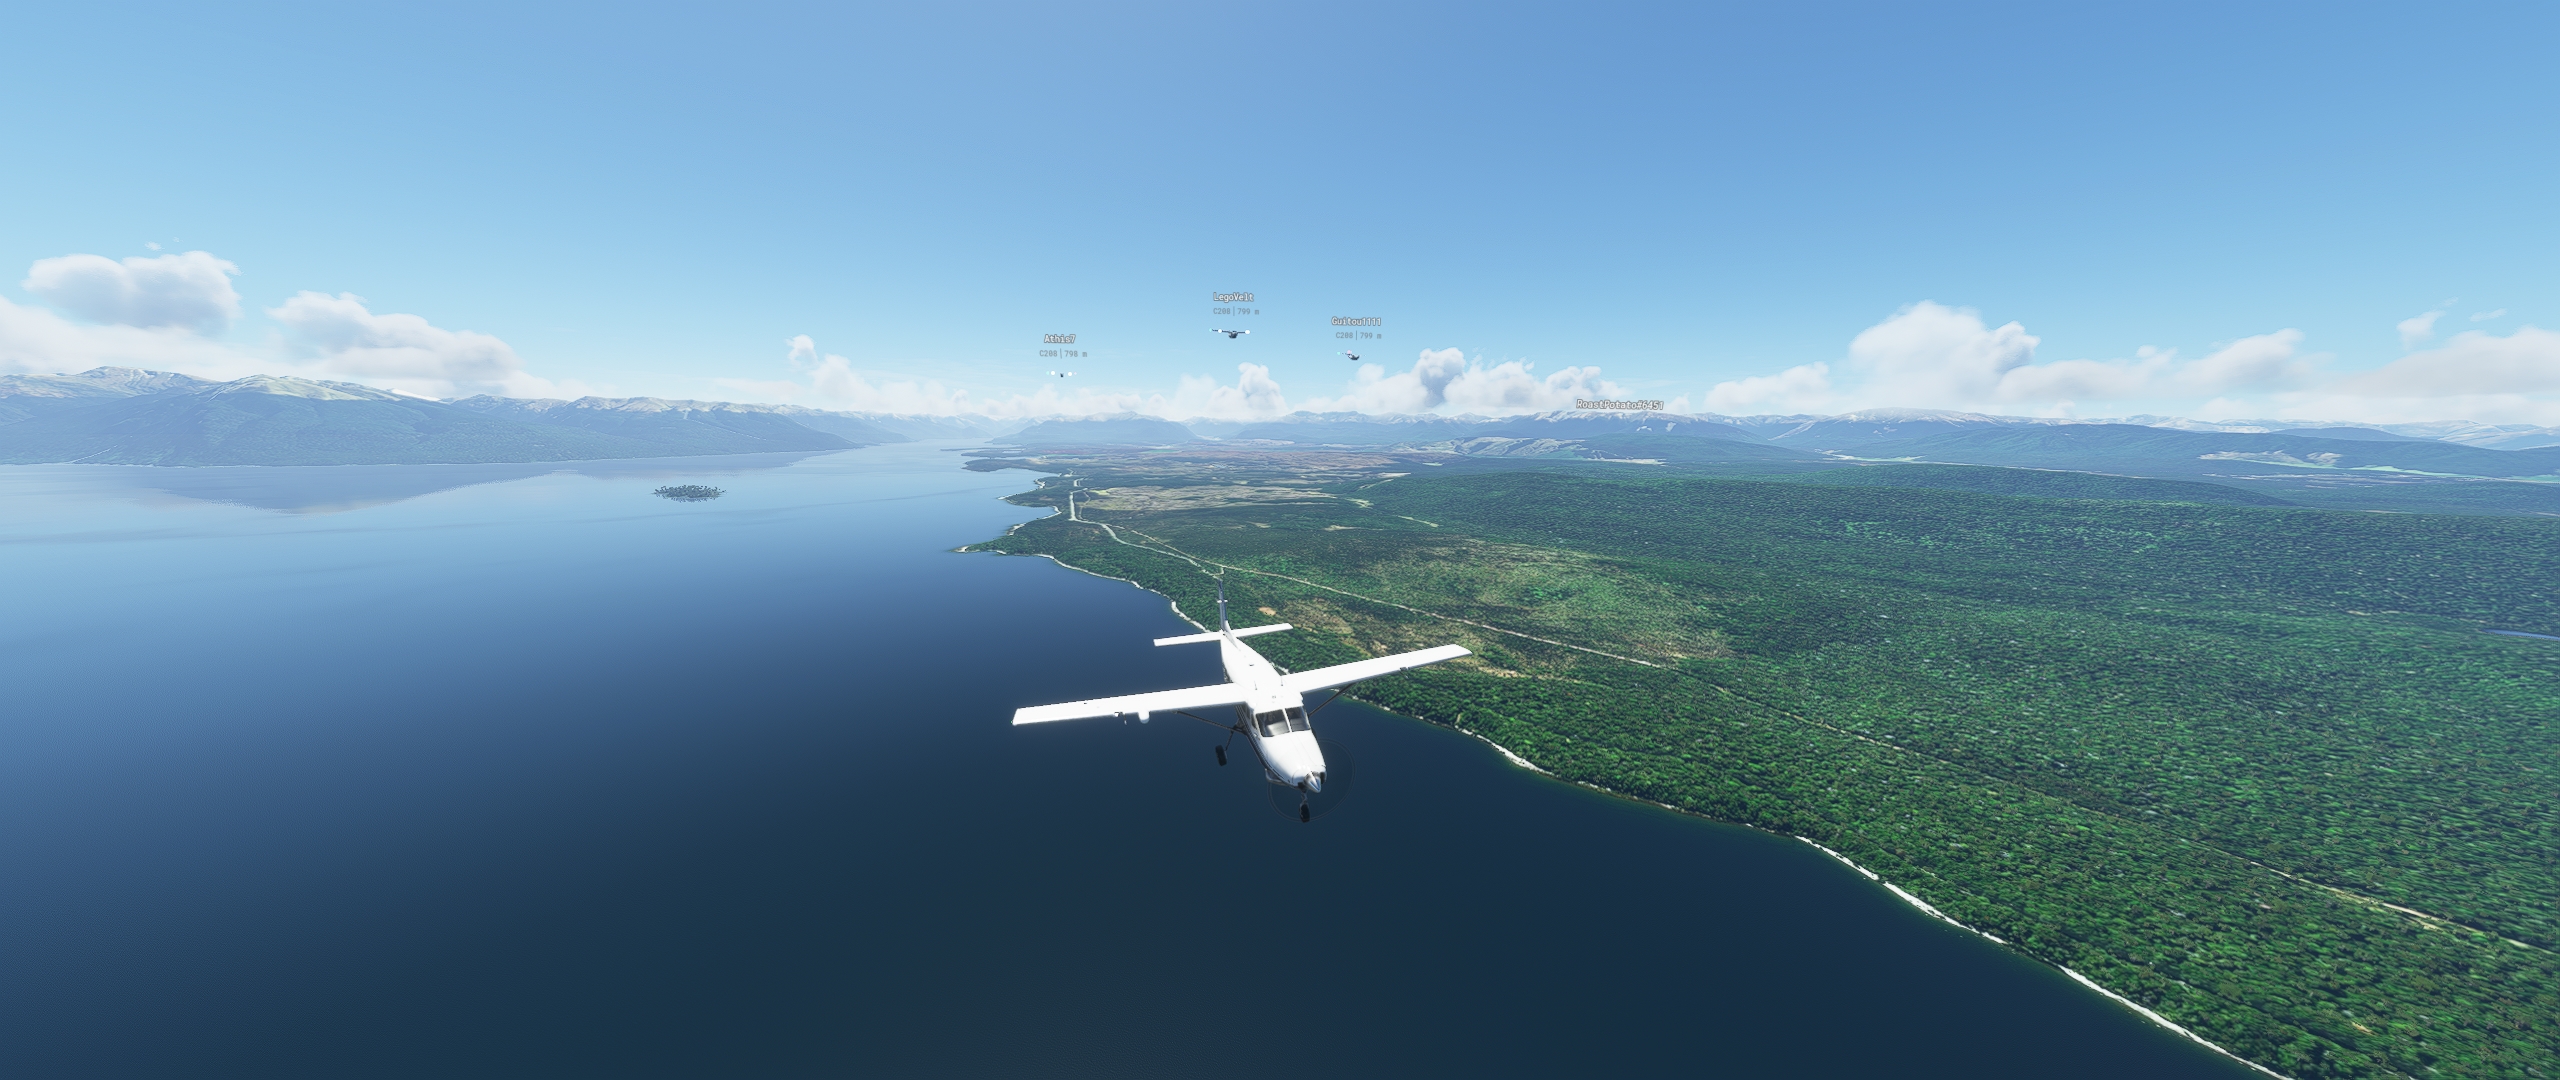 2021-01-02 17_41_02-Microsoft Flight Simulator - 1.12.13.0.jpg